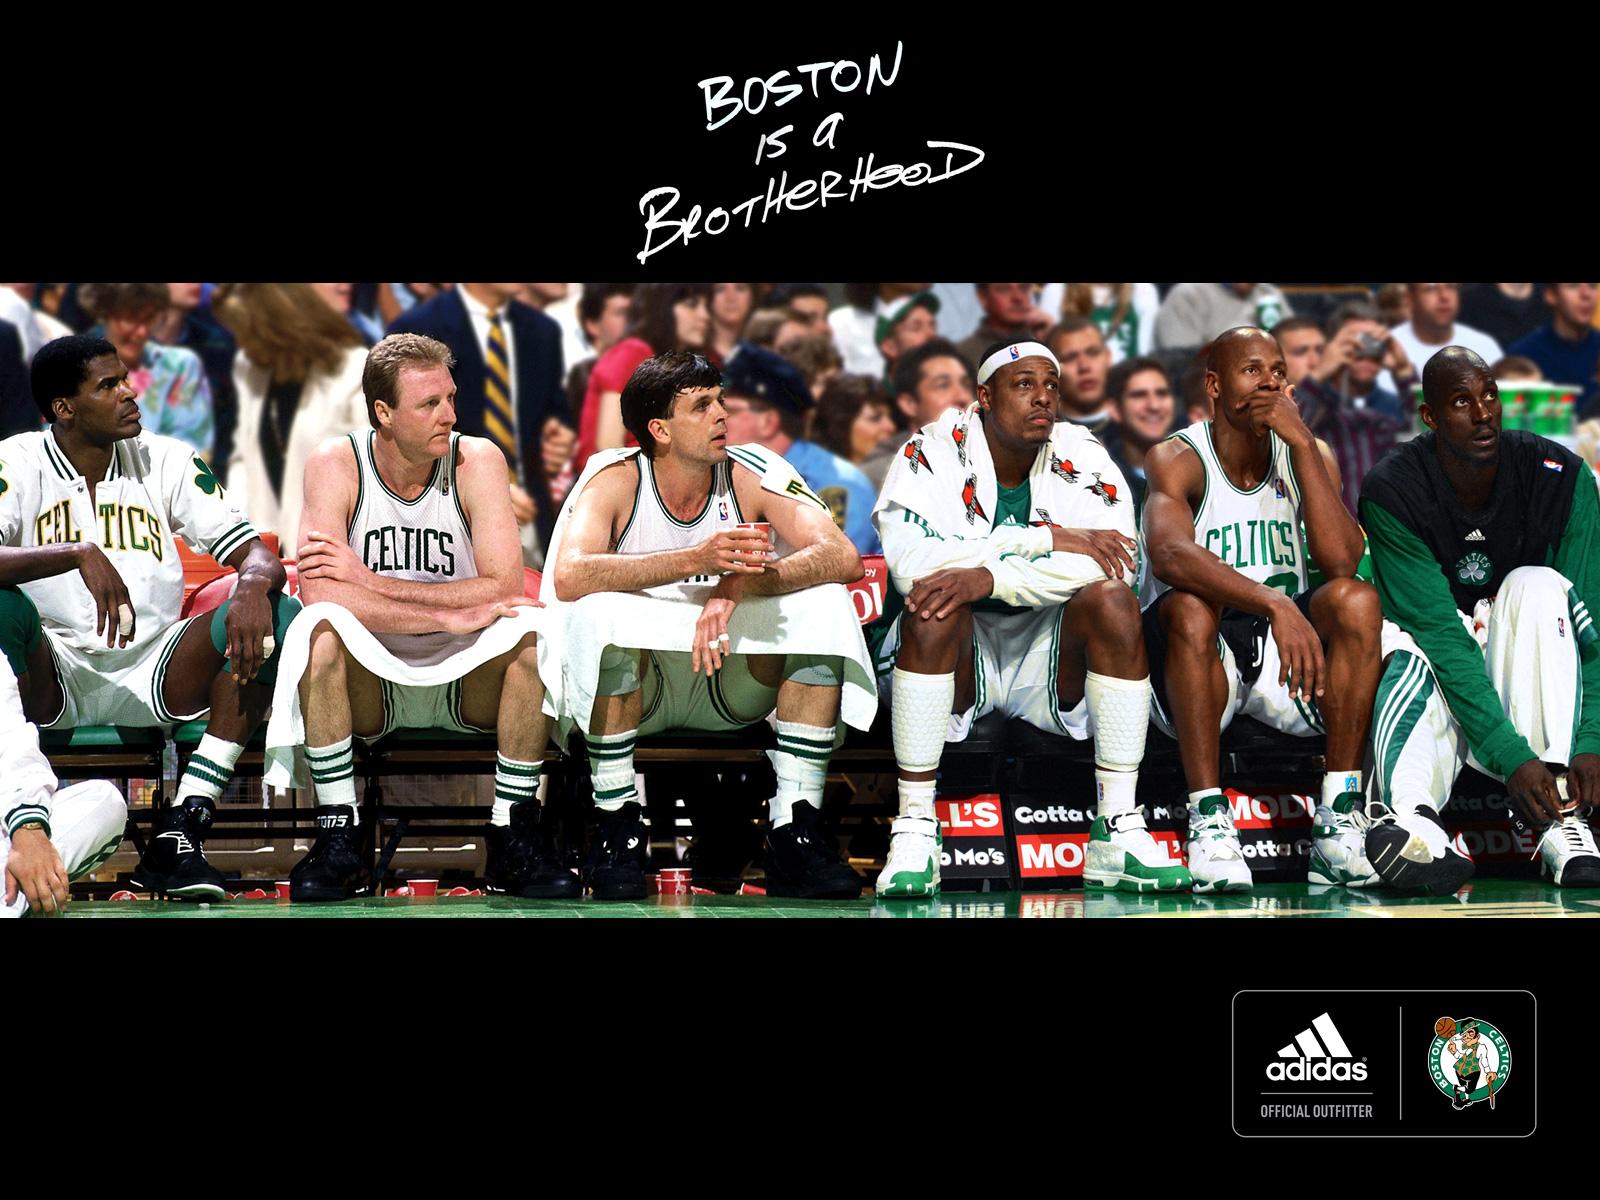 Imgenes de Boston Celtics Fondos de pantalla de Celtics